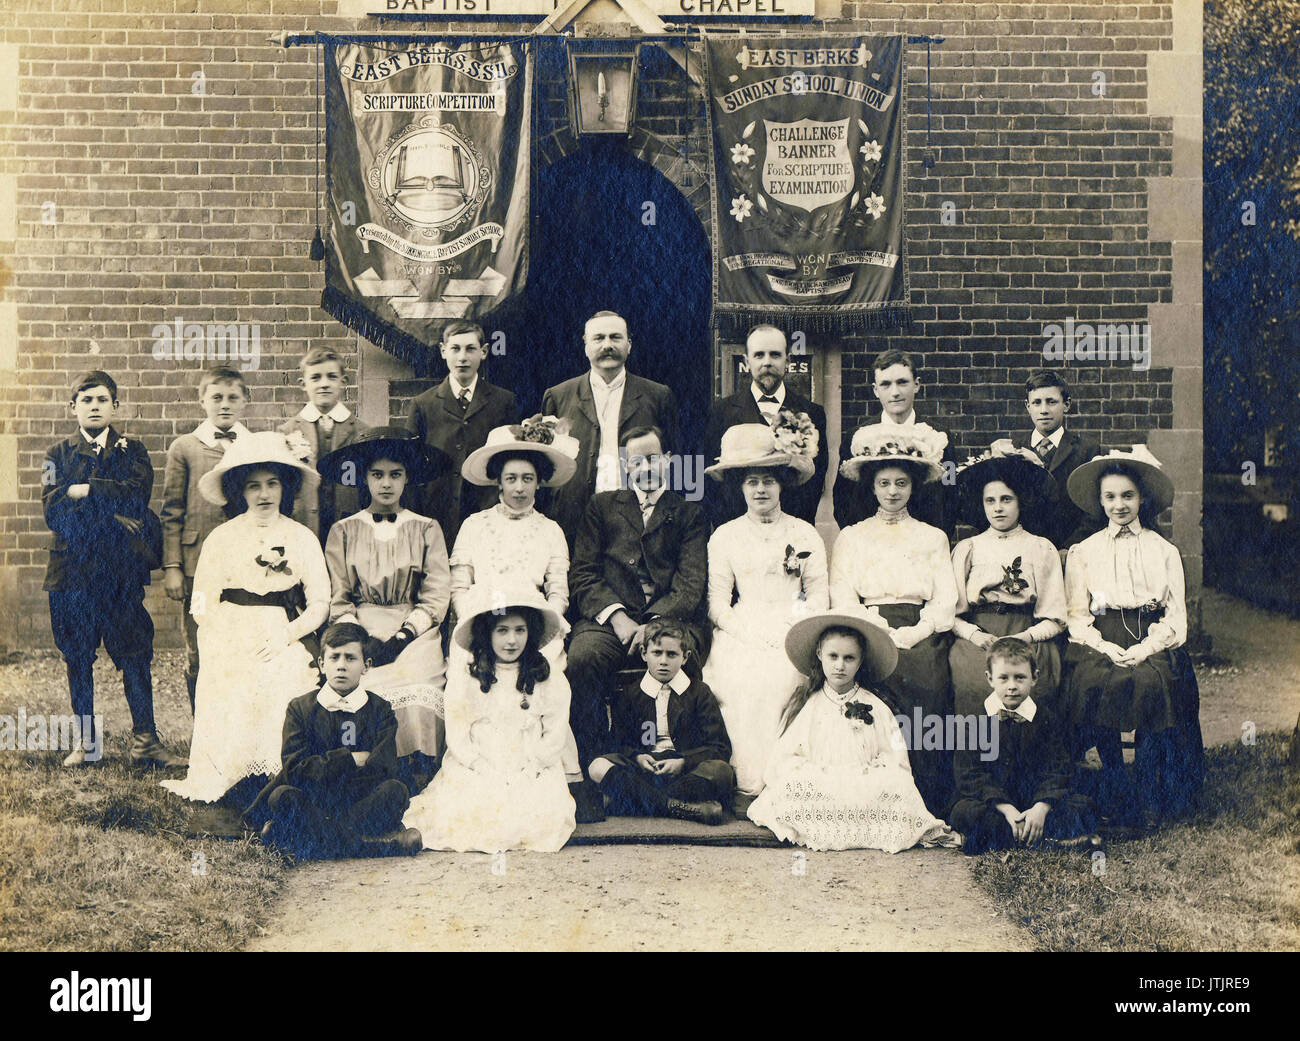 Sunday School Union, Sunningdale, Berkshire, c1910s, historic archive photograph Stock Photo